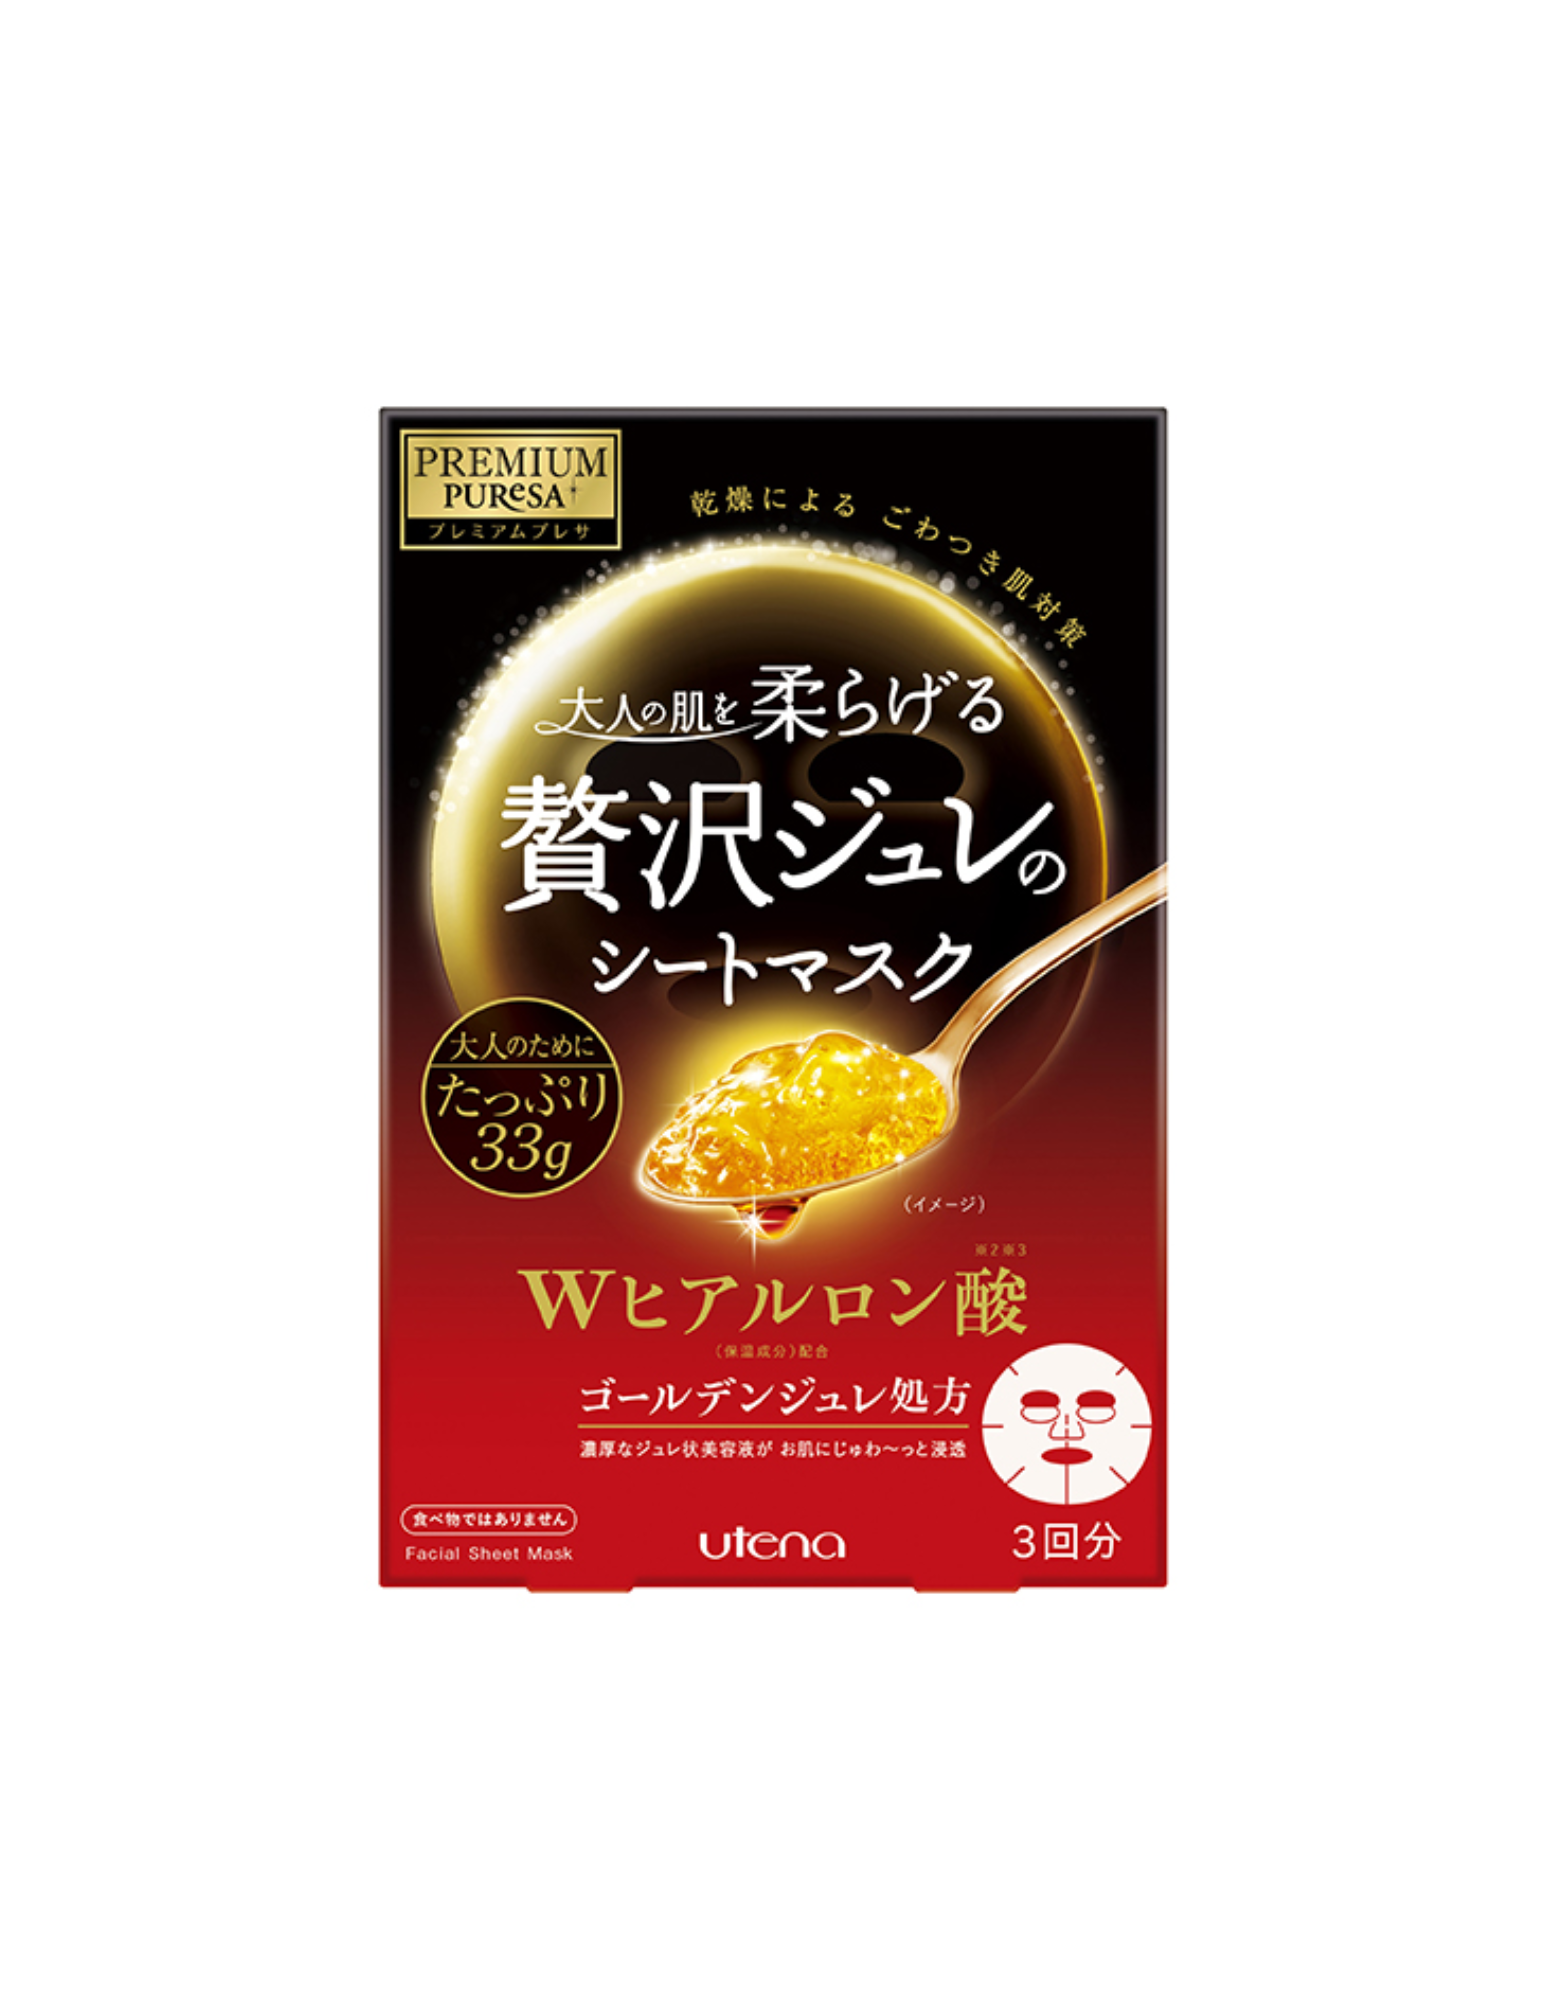 Utena Premium Puresa Golden Jelly Mask